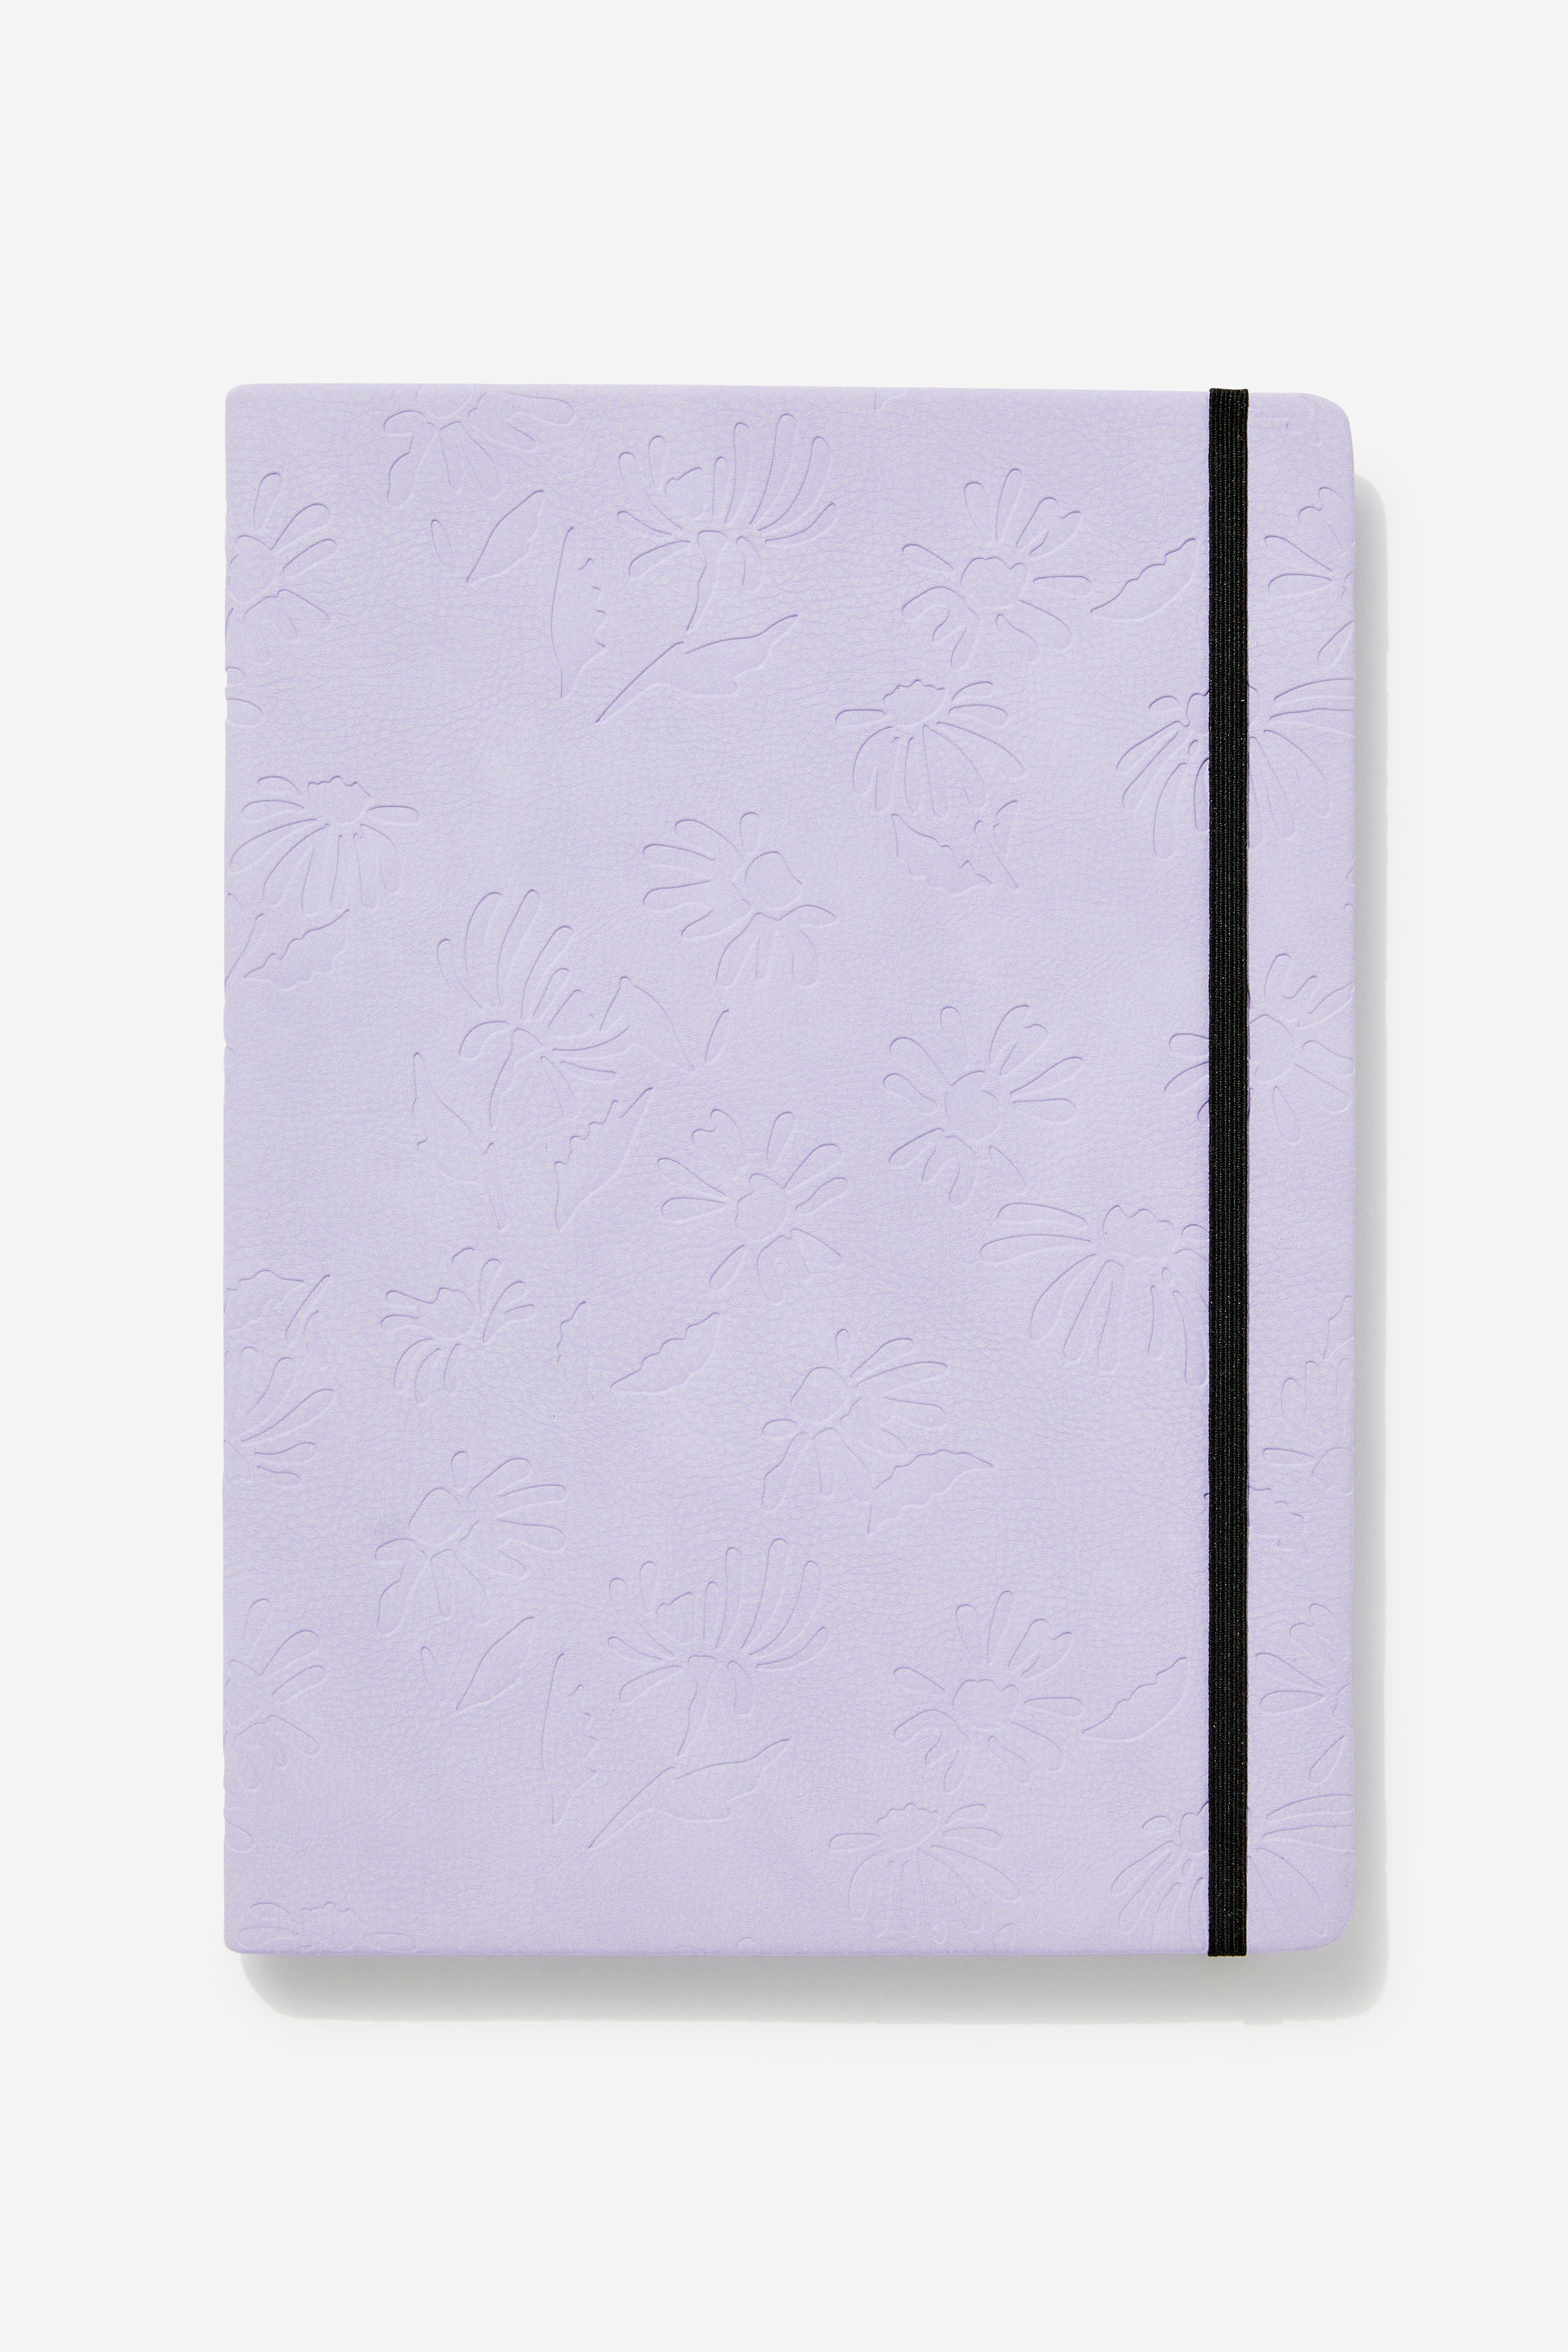 Typo - A4 Premium Buffalo Journal - Daisy soft lilac debossed